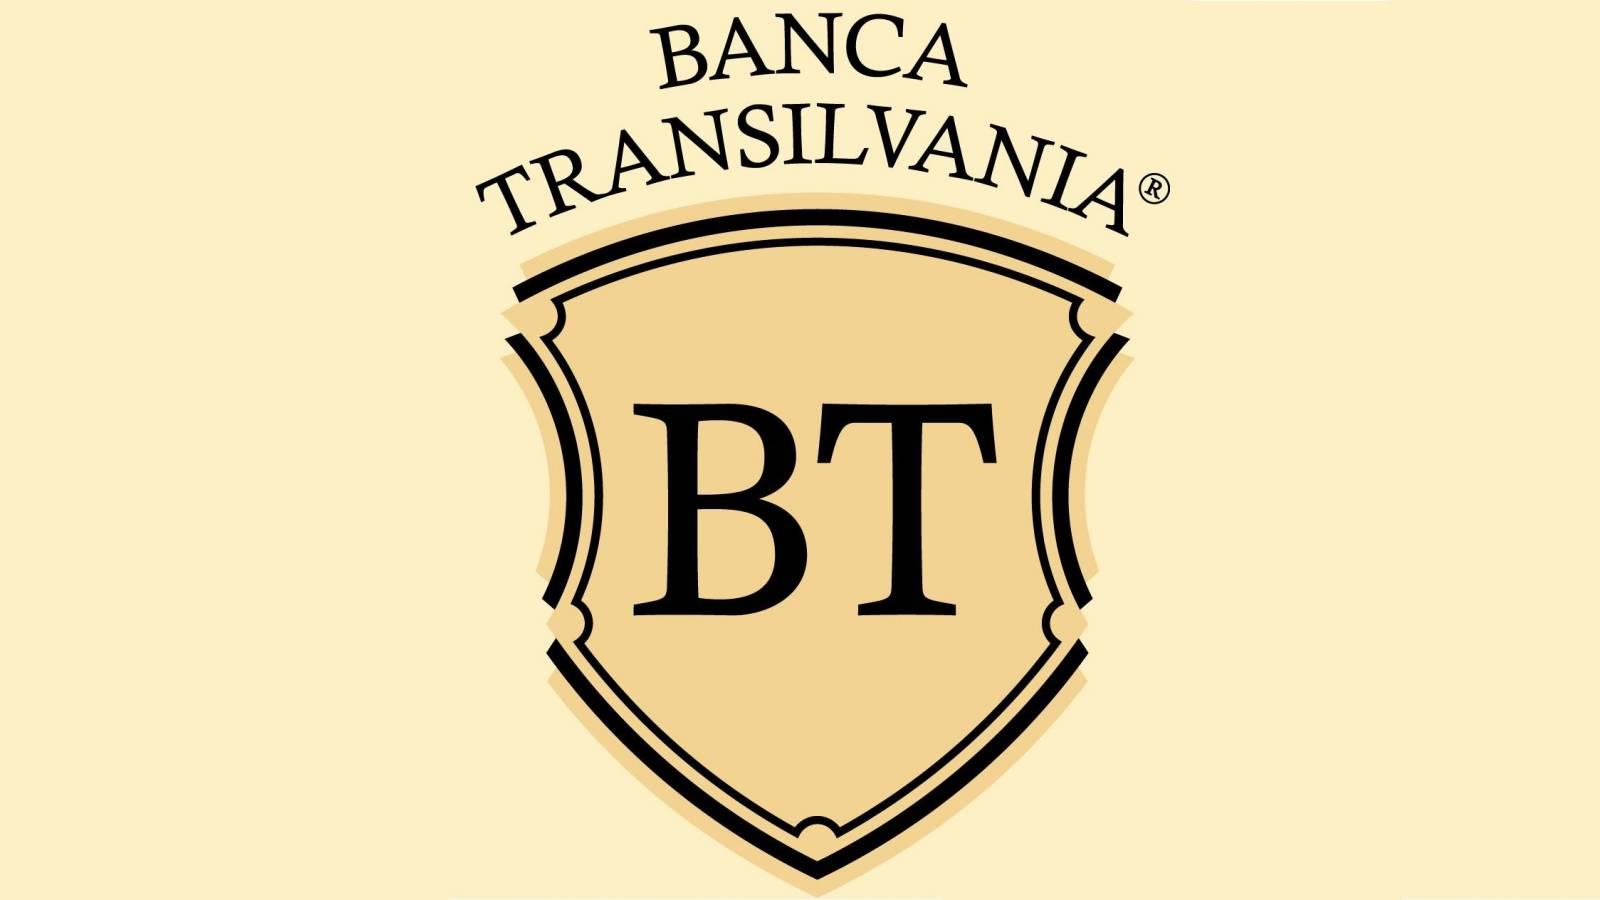 BANCA Transilvania -kysely